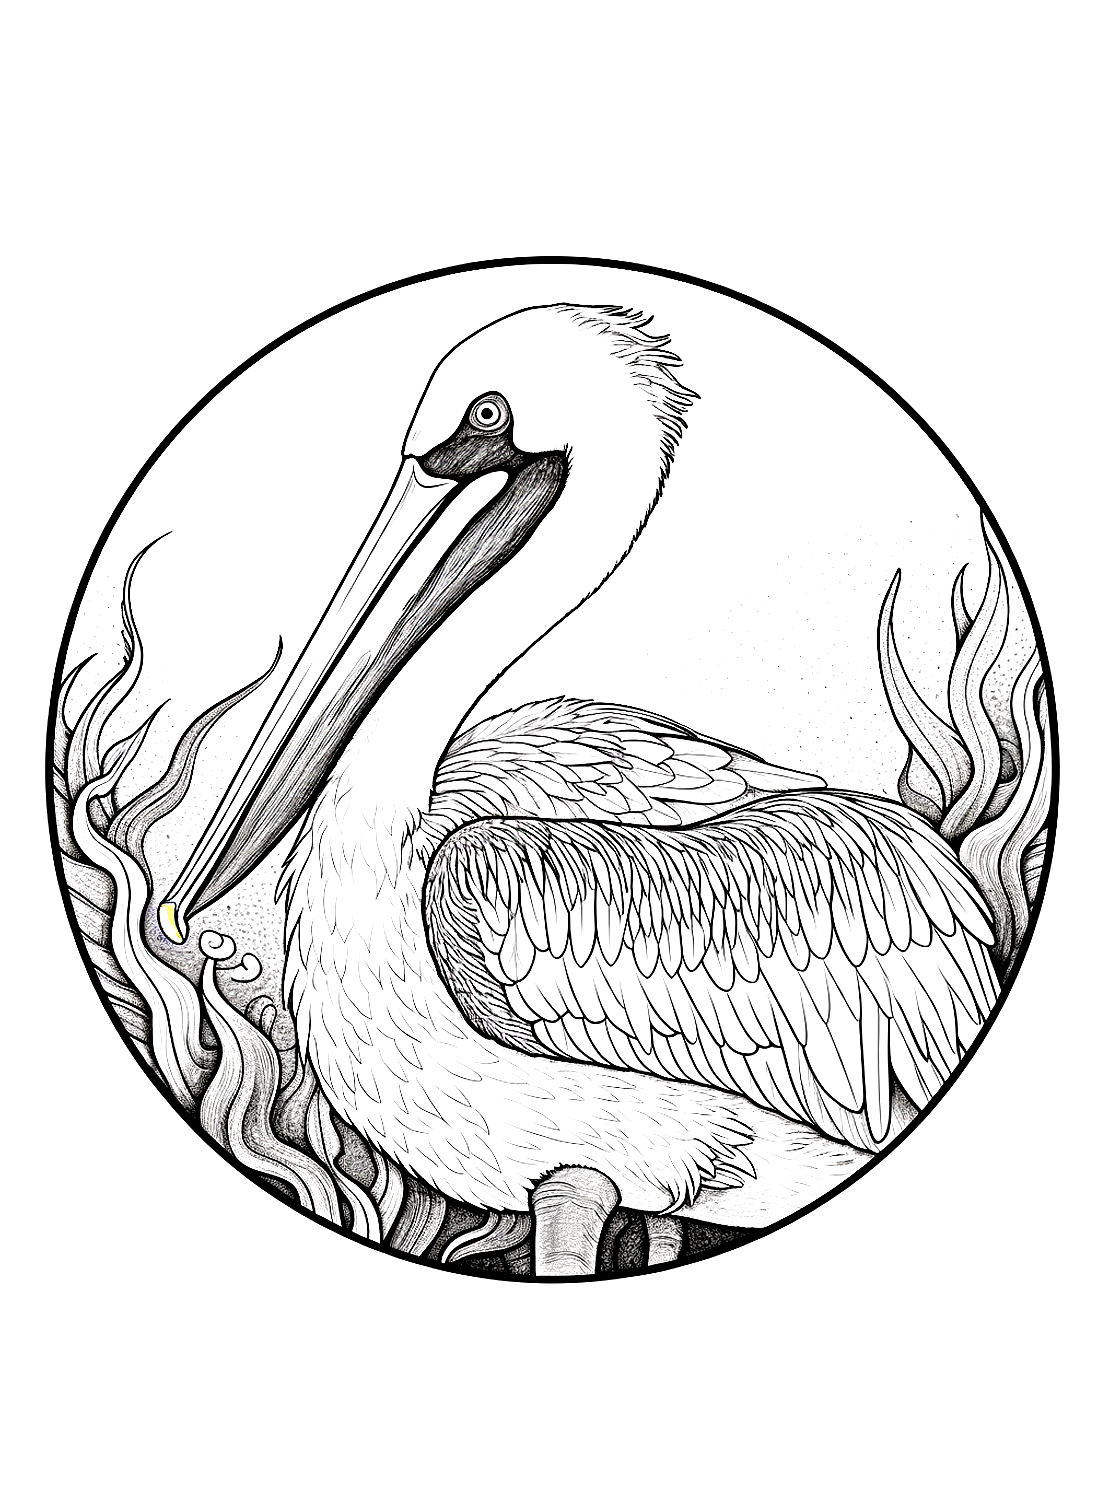 来自 Pelican 的艺术家 Pelican